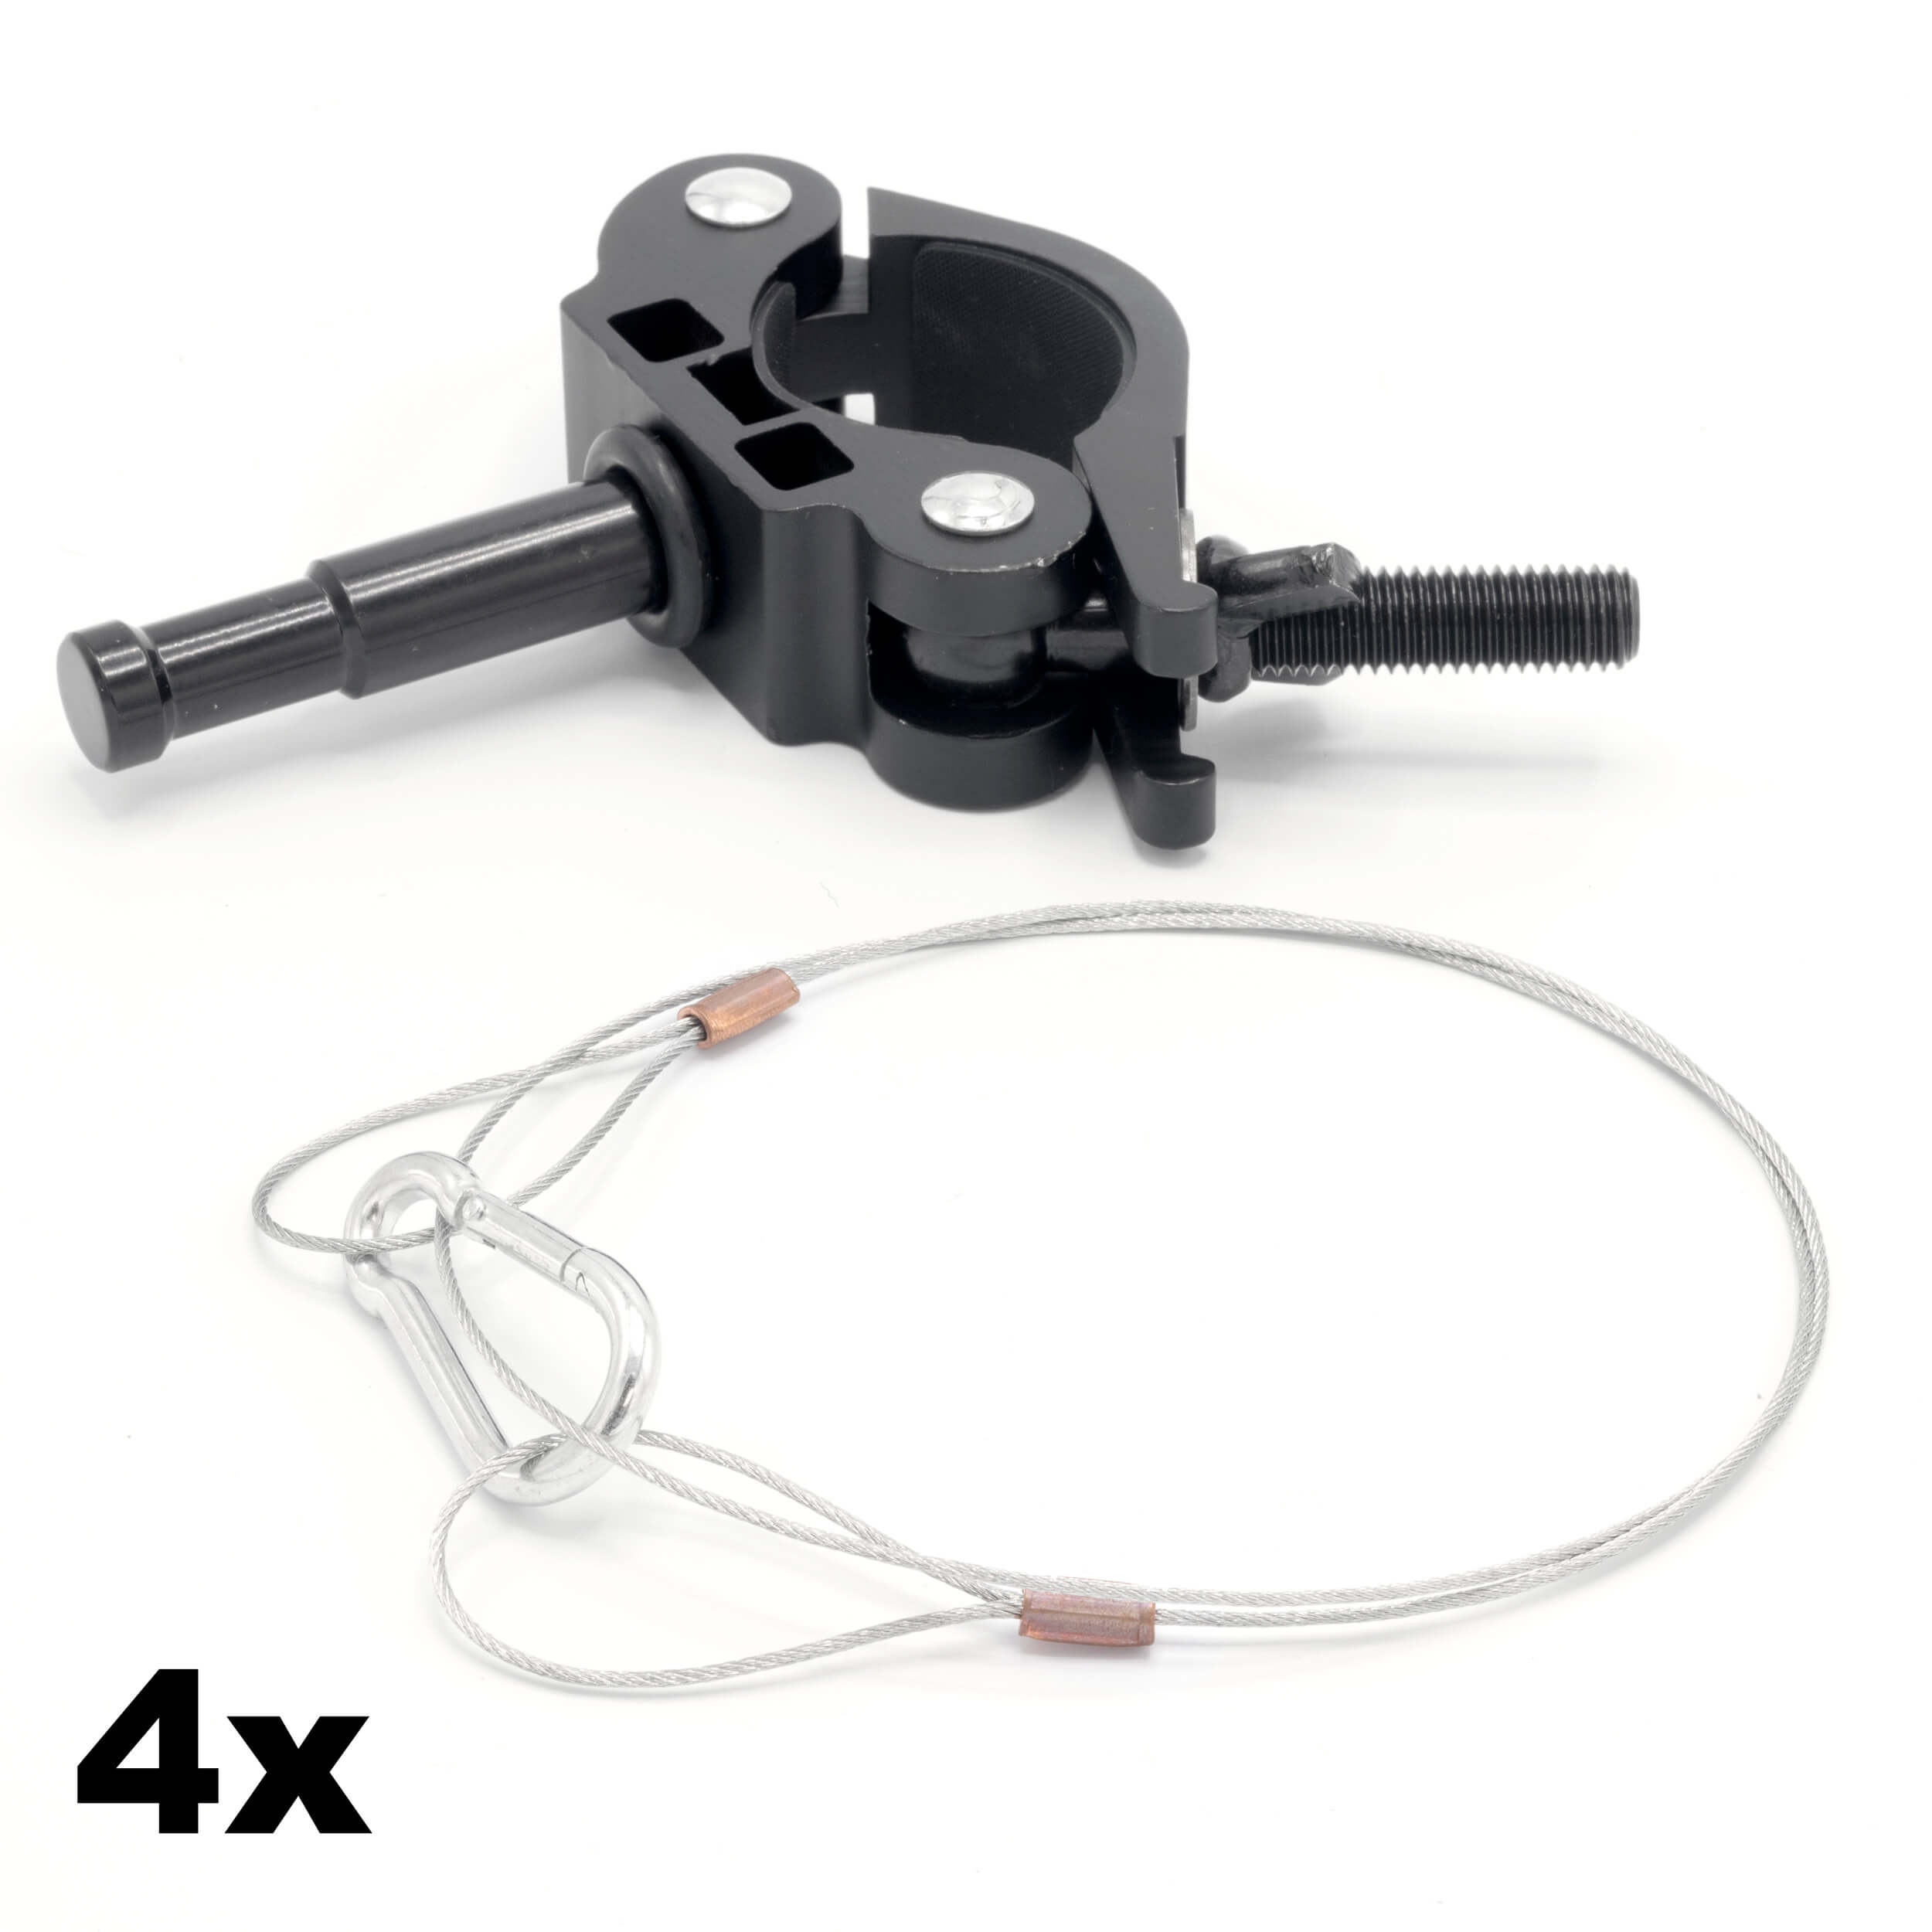 42-50mm Essential Accessory Kit for Studio Lighting 